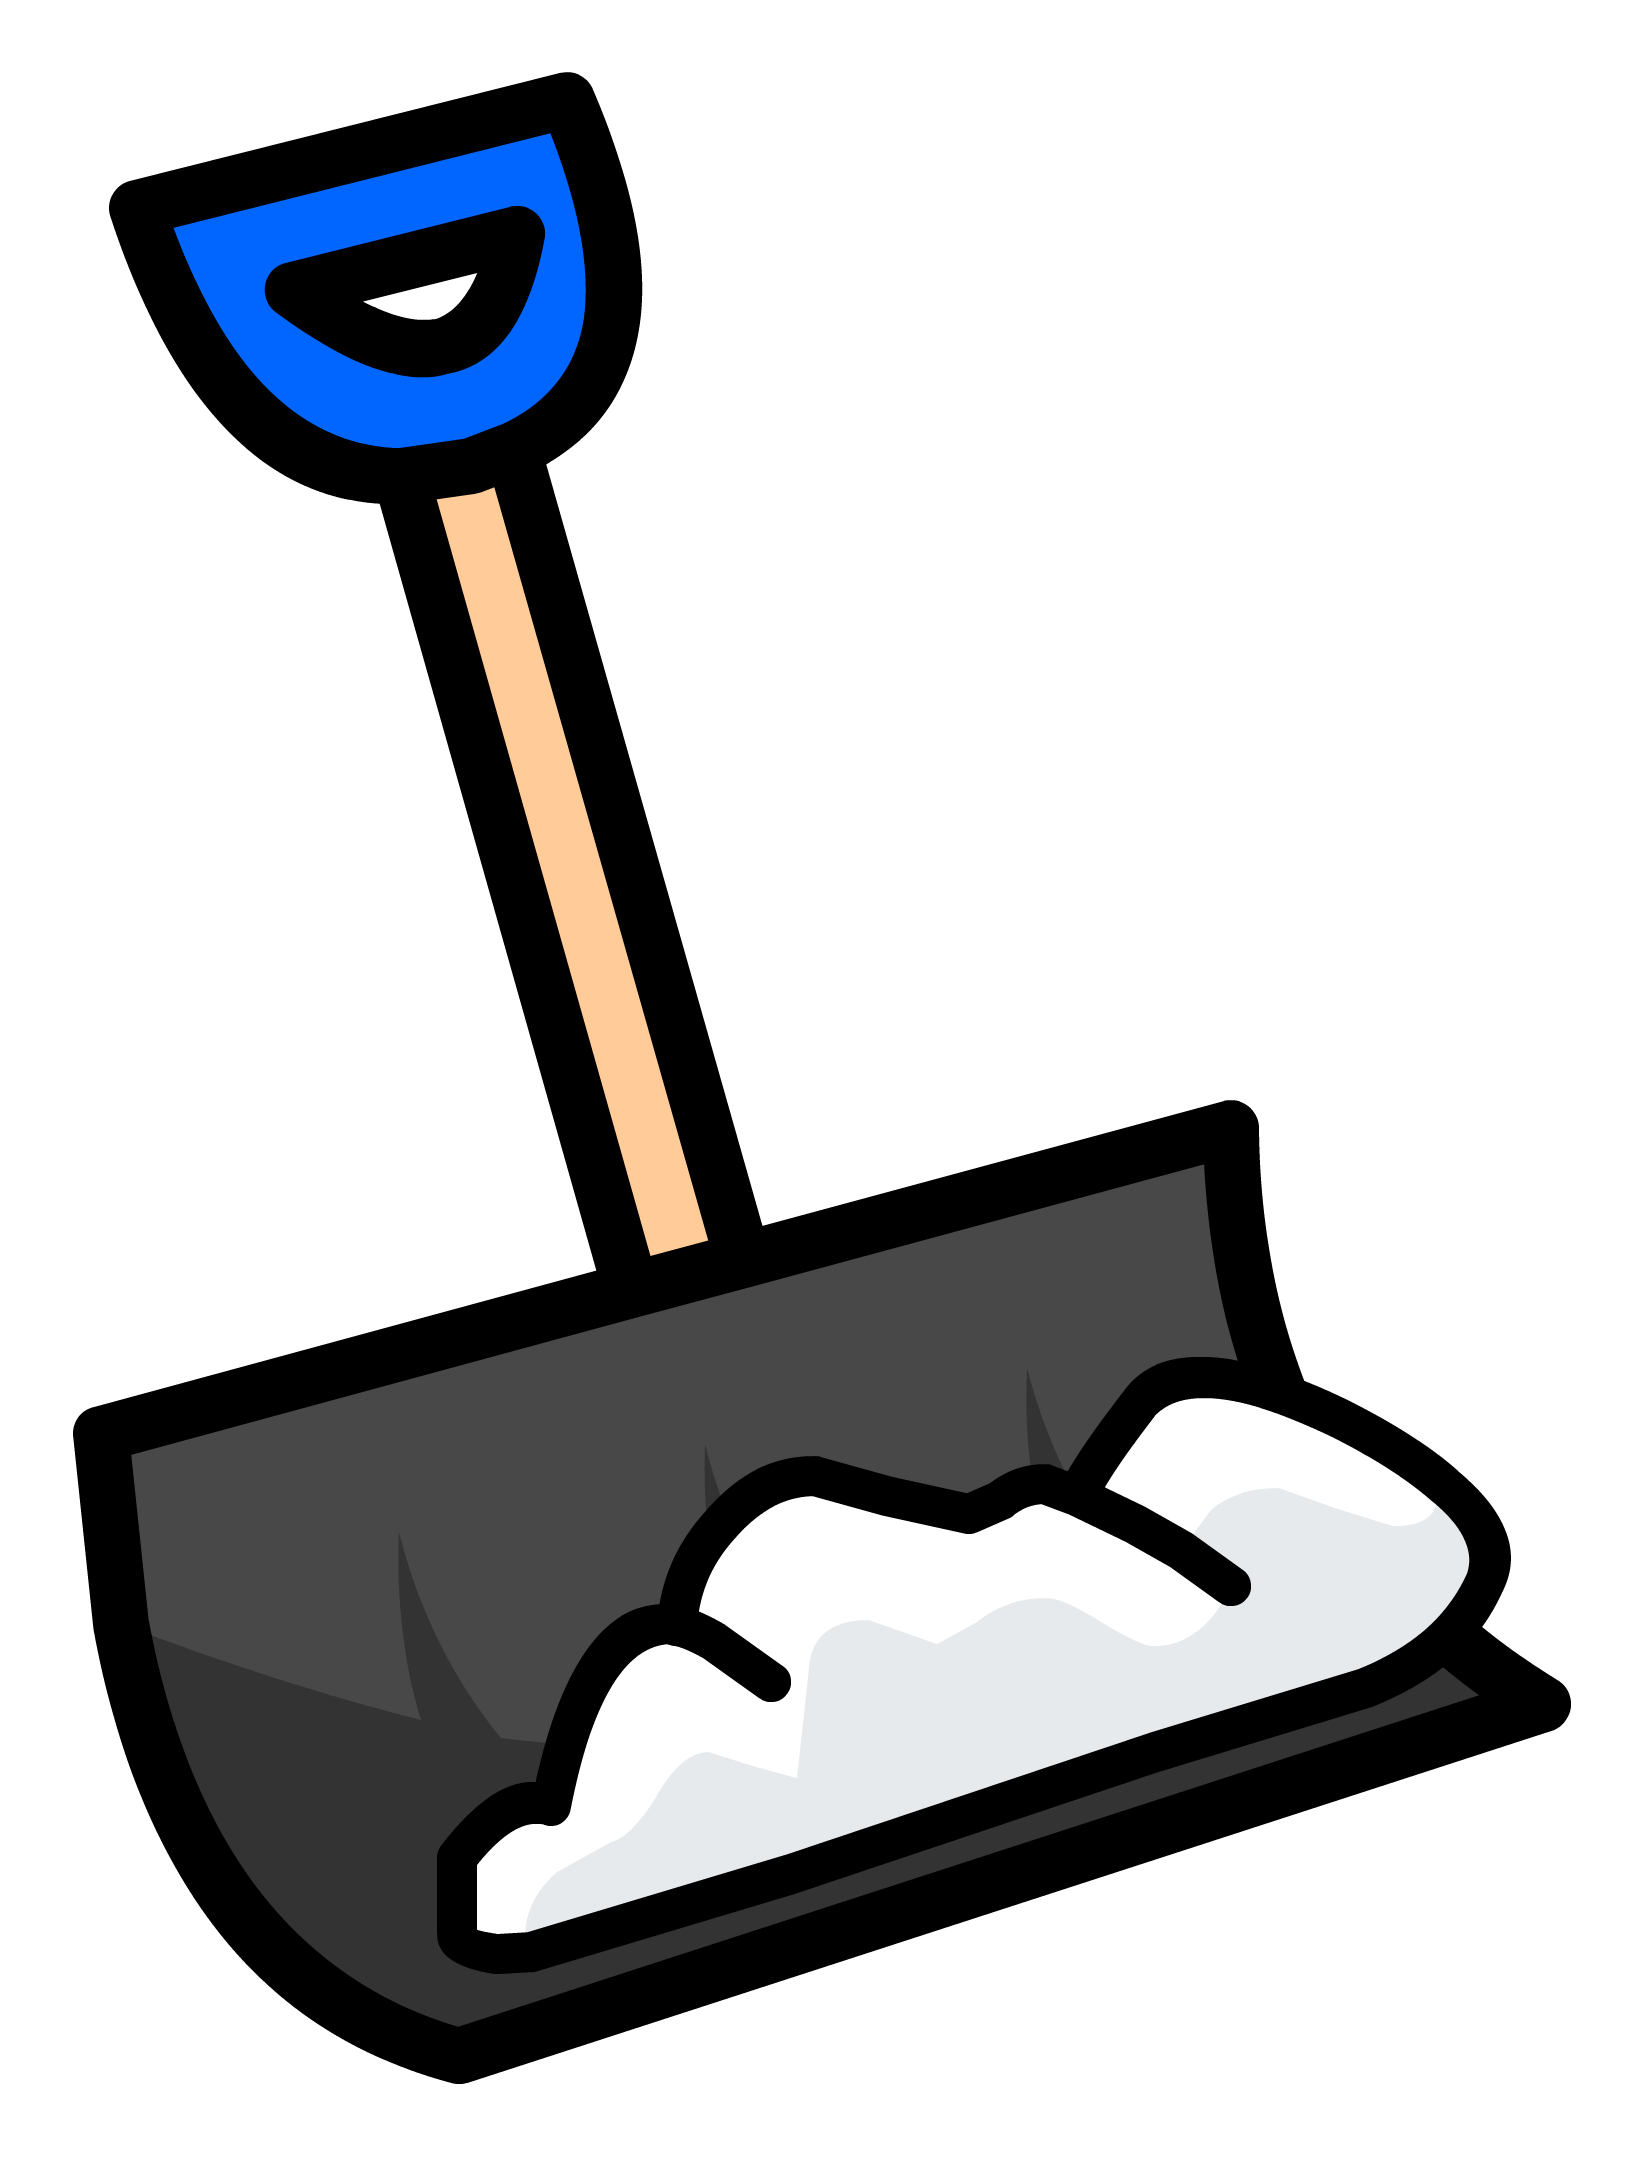 Blue Snow Shovel Pin - Club Penguin Wiki - The free, editable ...